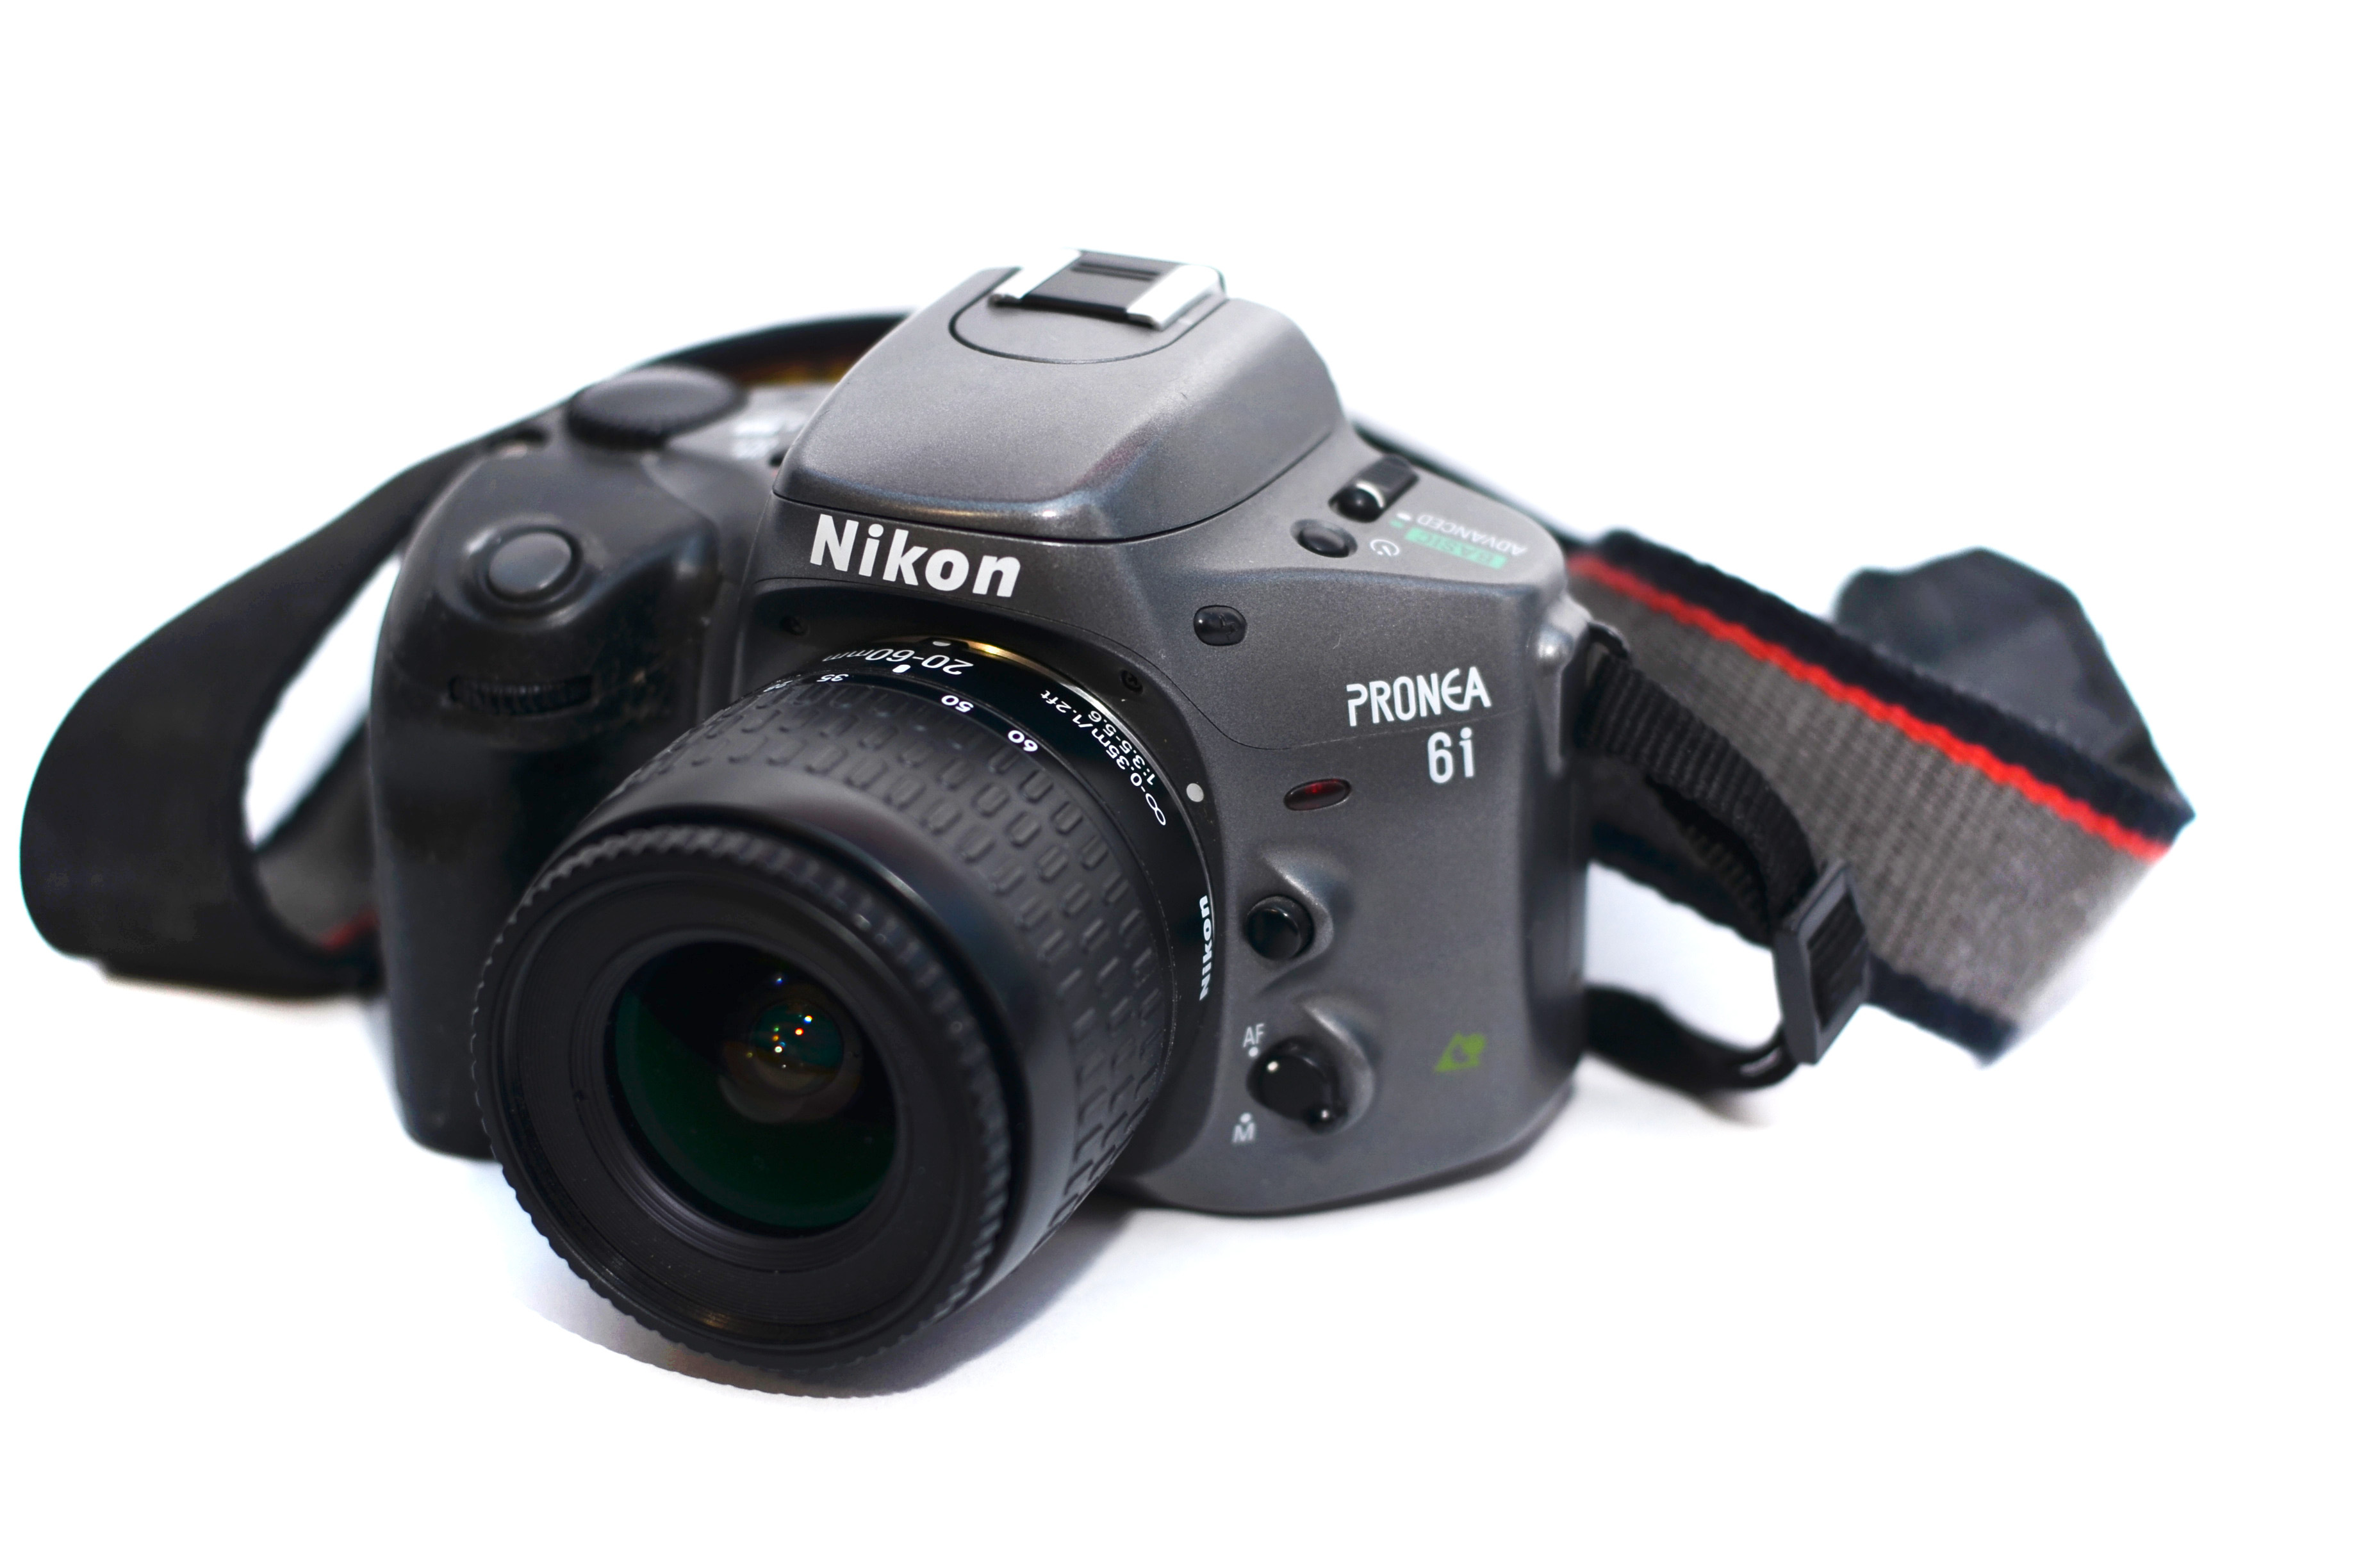 The Nikon Camera List - Nikon Pronea 600i